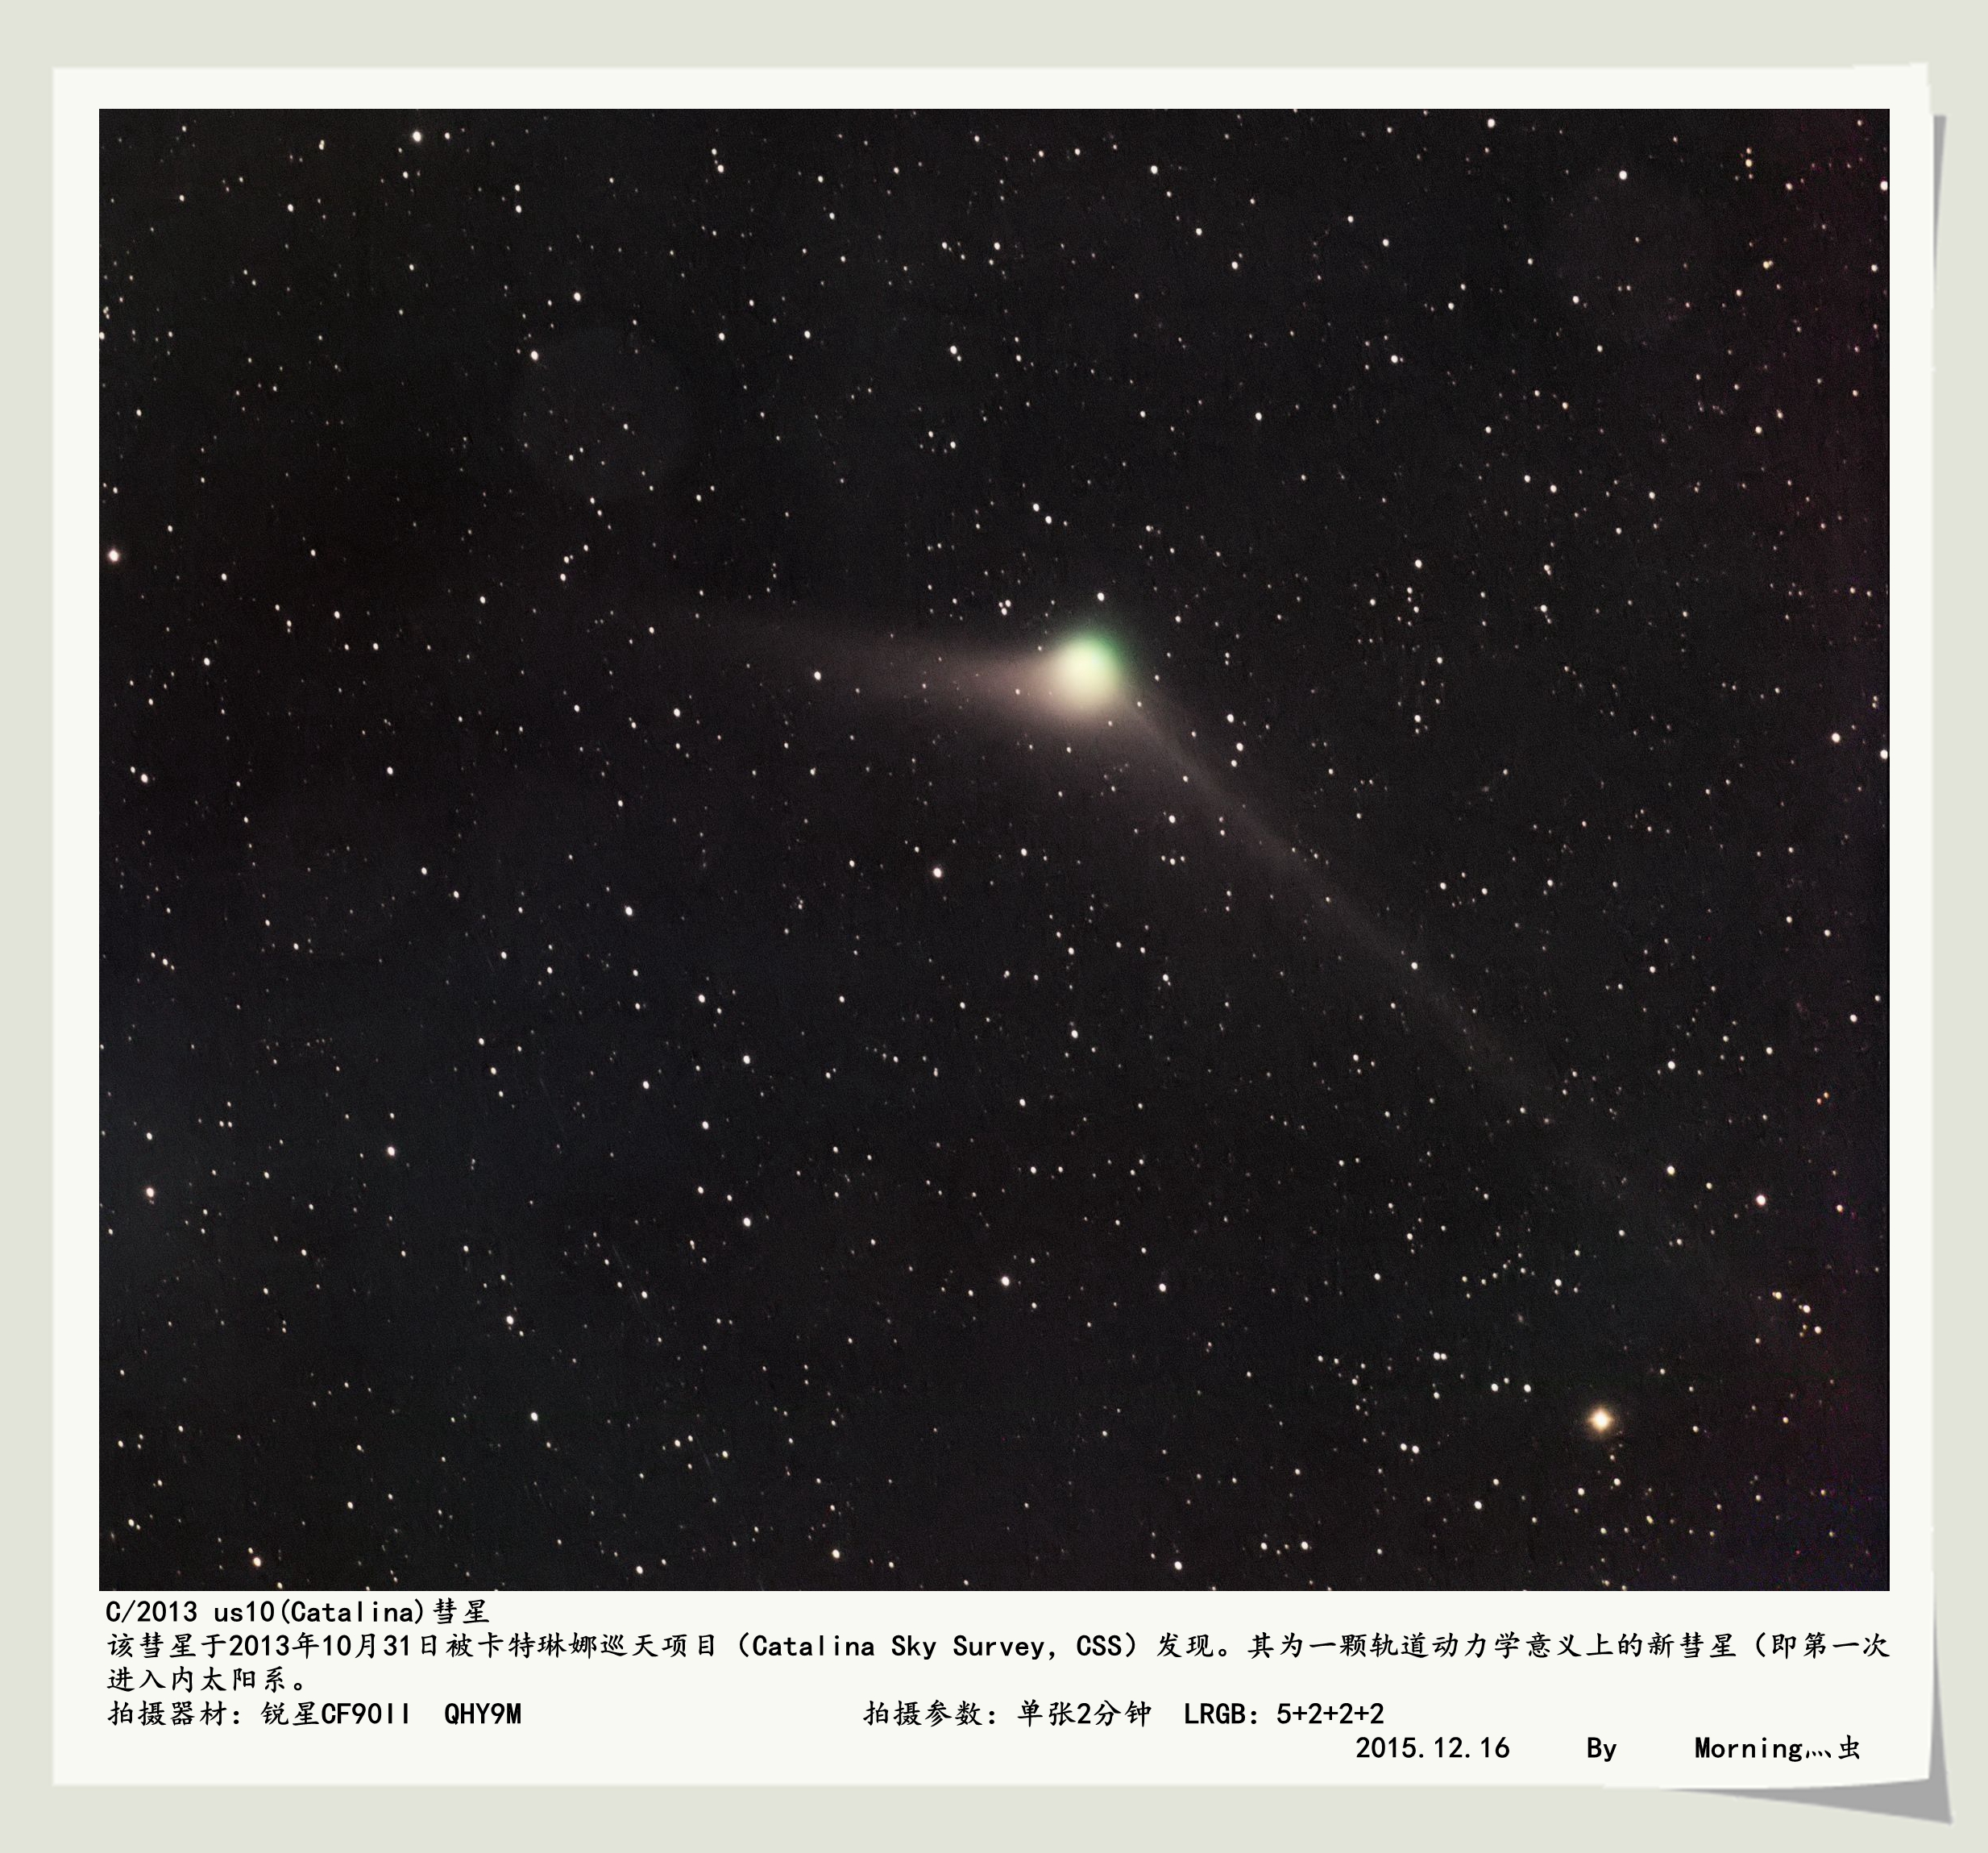 C2013 us10 (Catalina)彗星.jpg